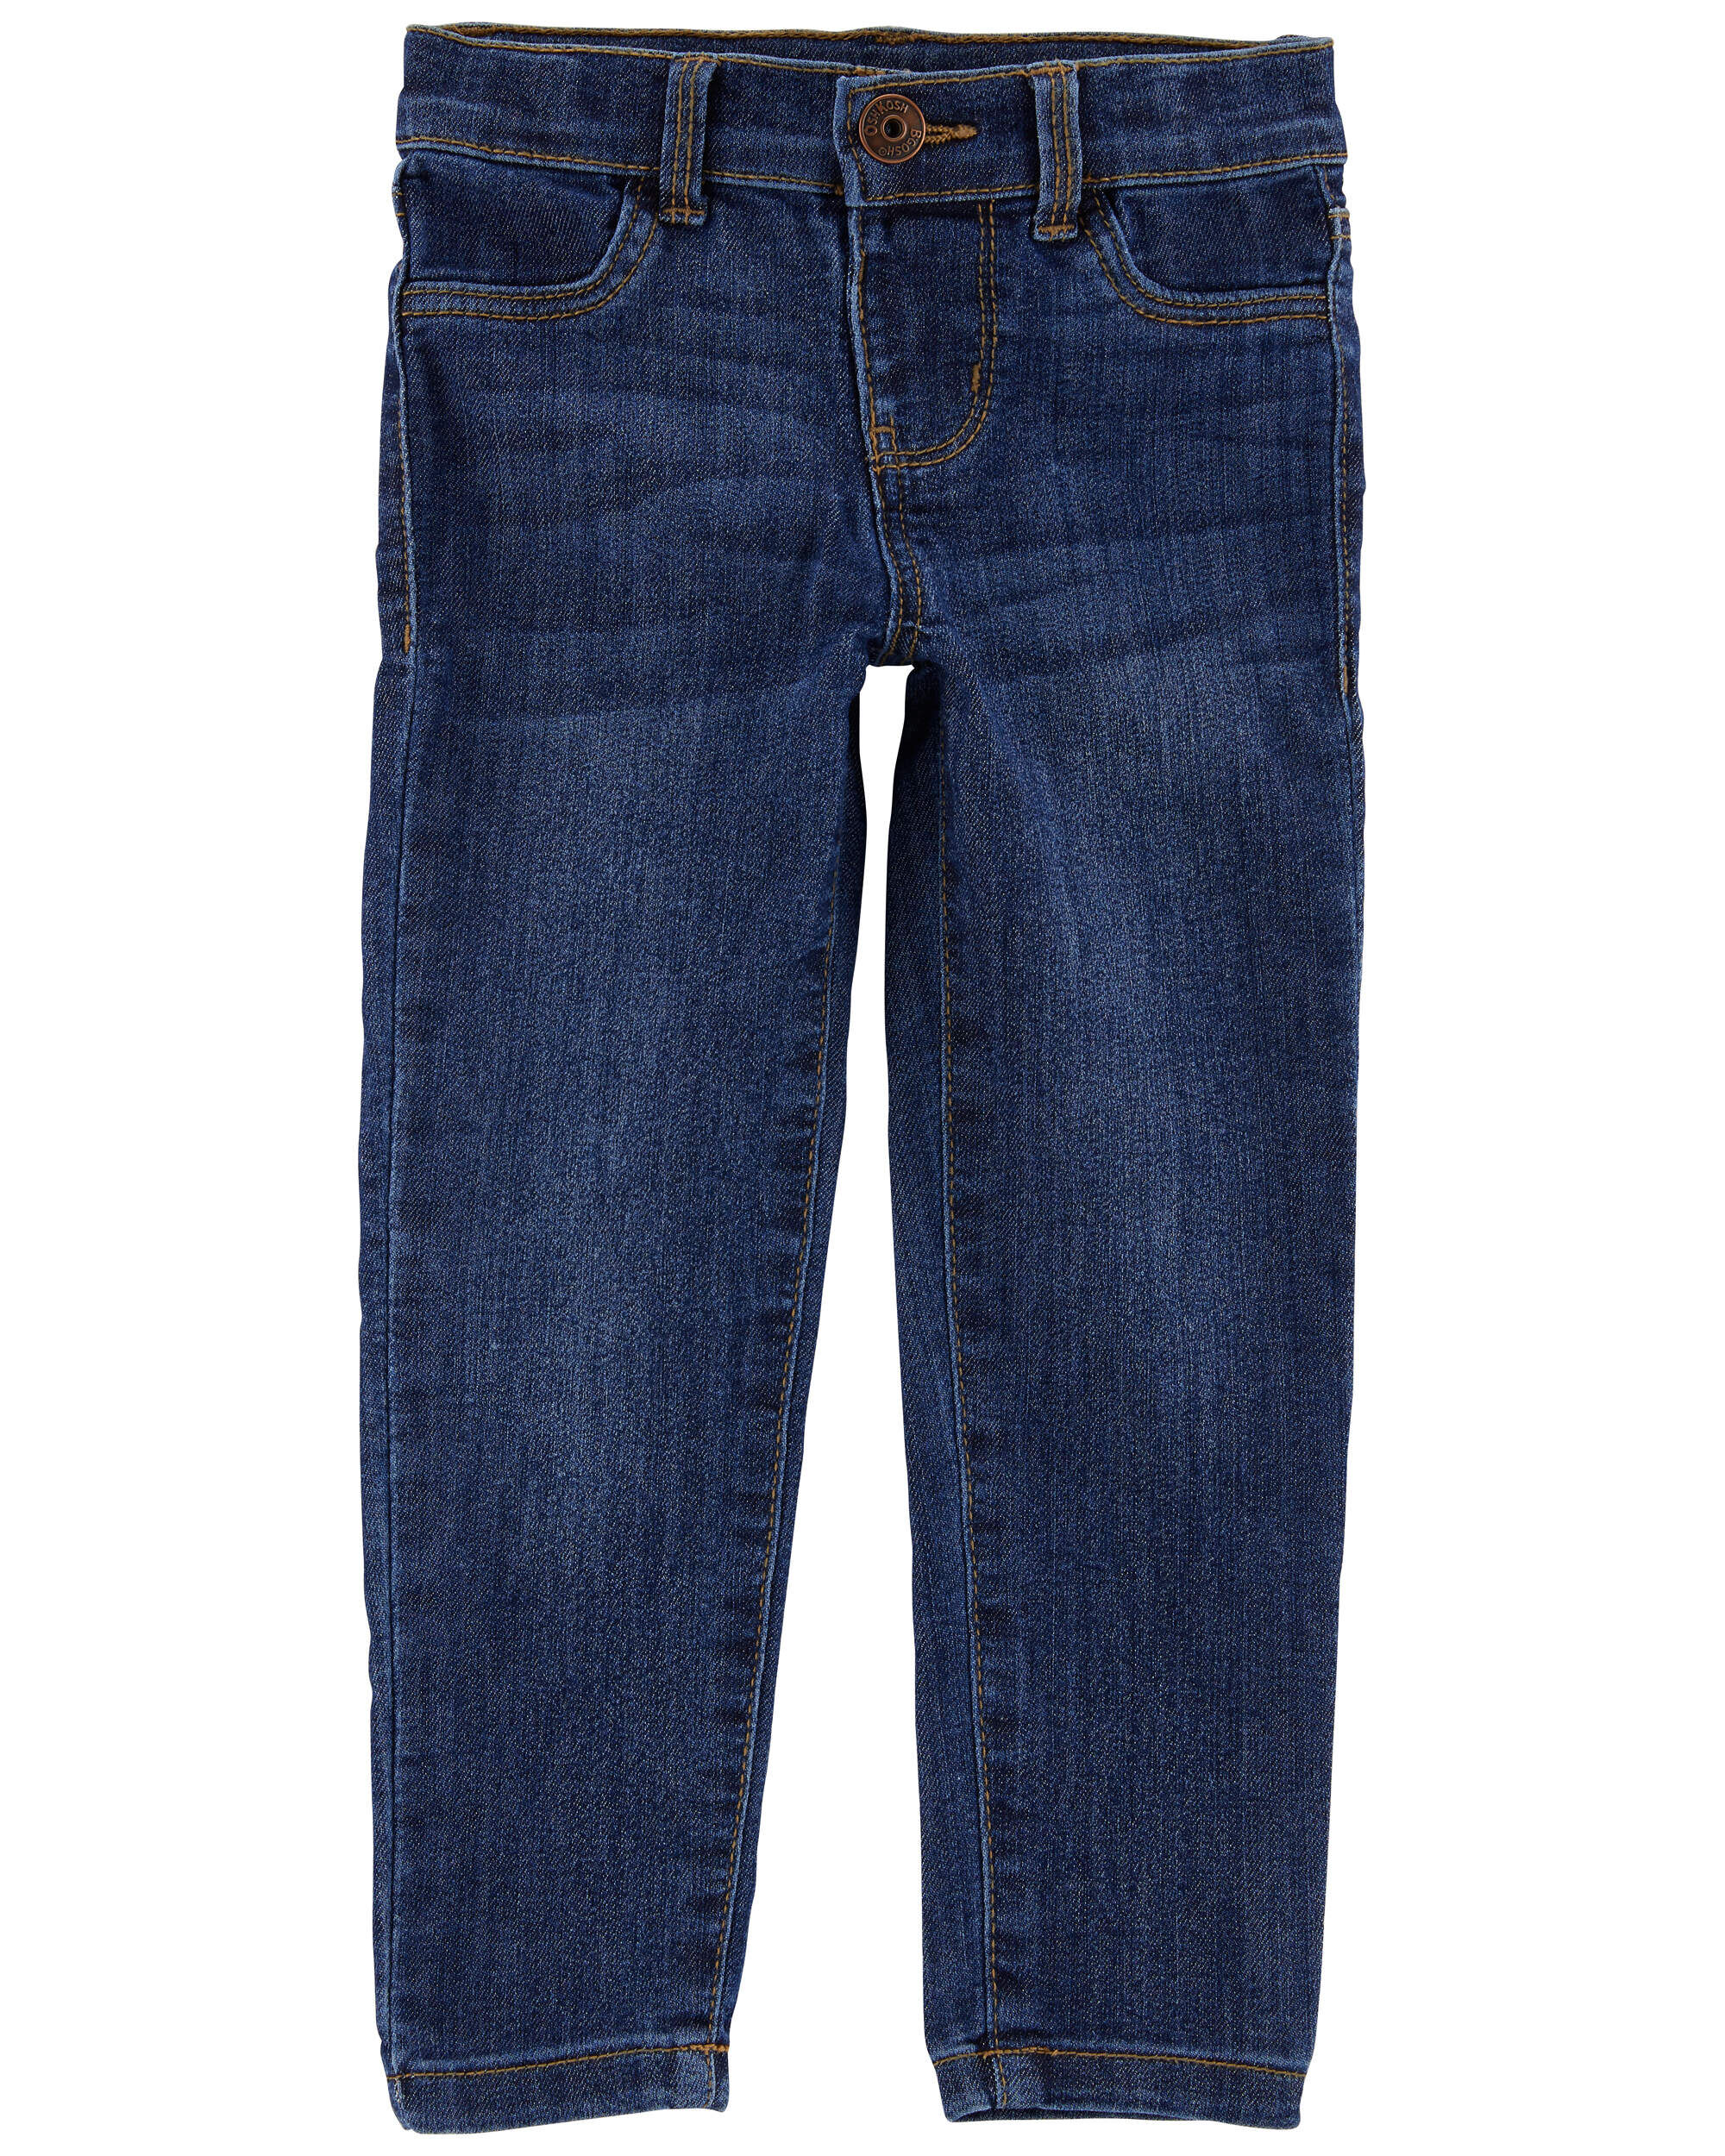 Wenge Brown Rinse Slim Fit Mid-Rise Clean Look Stretchable Denim Jeans